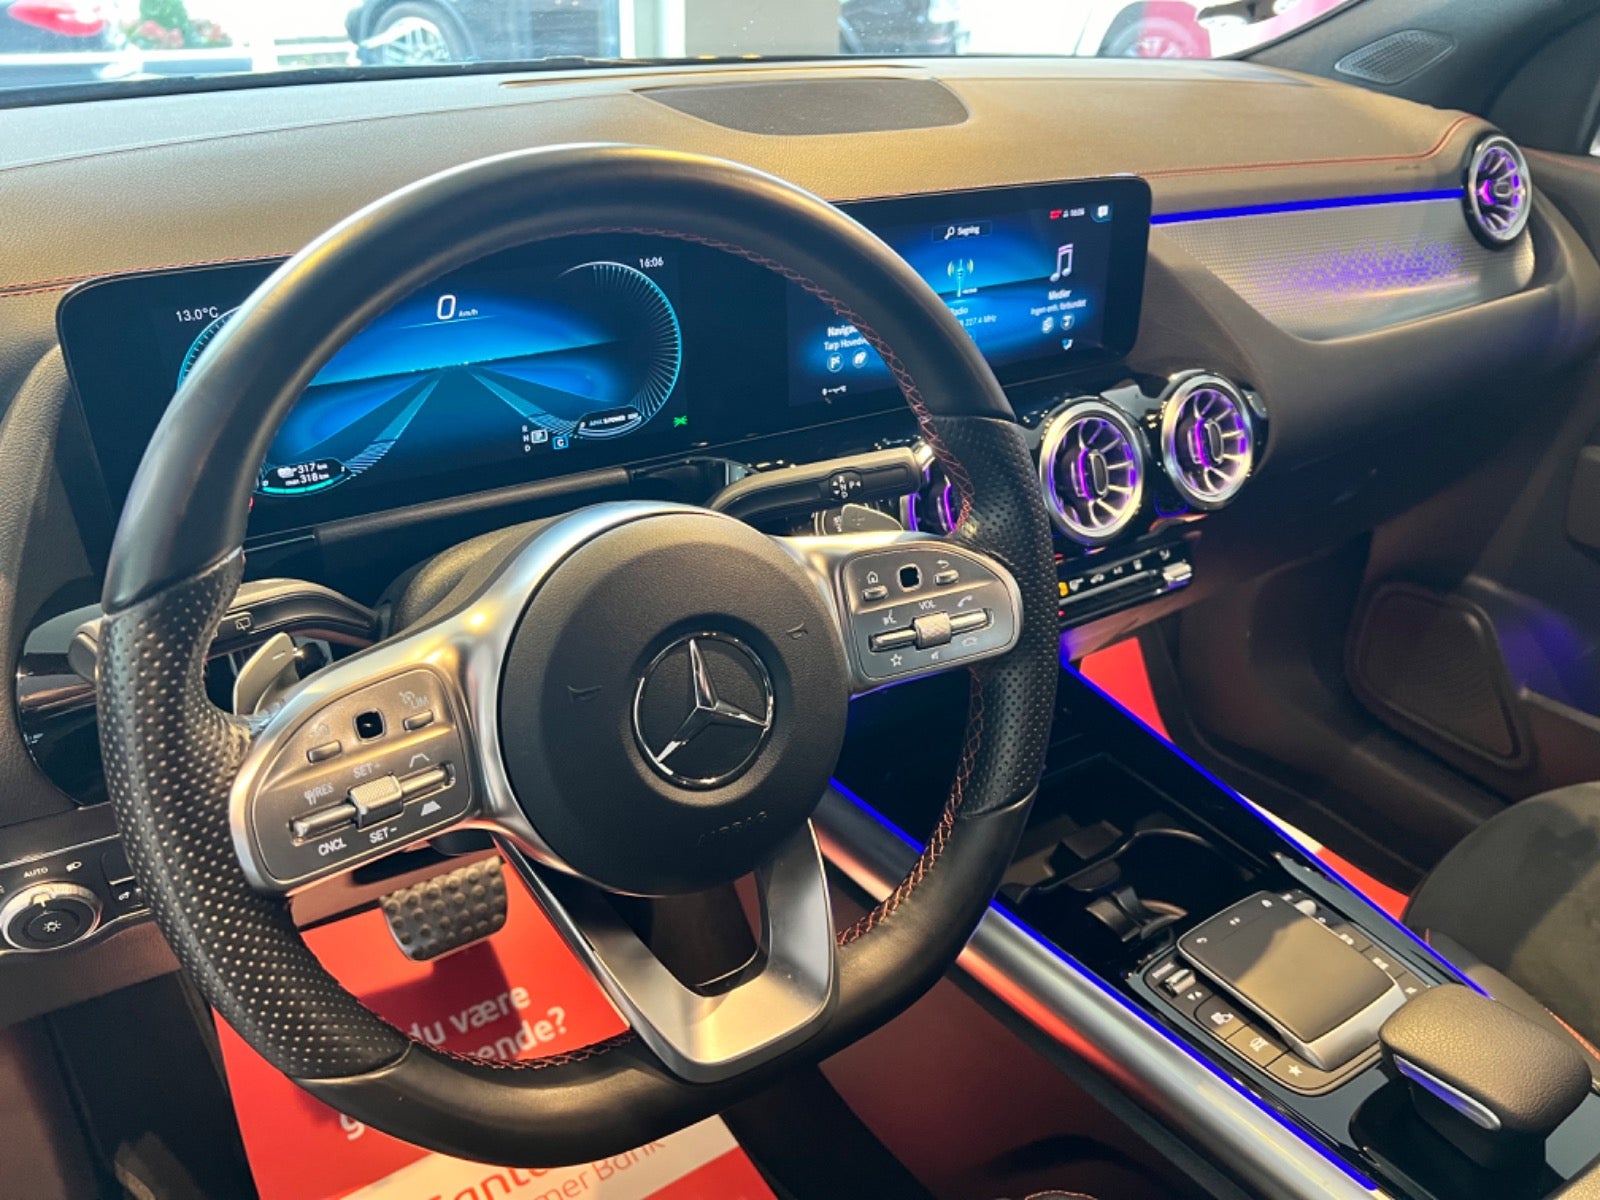 Mercedes EQA250 2022